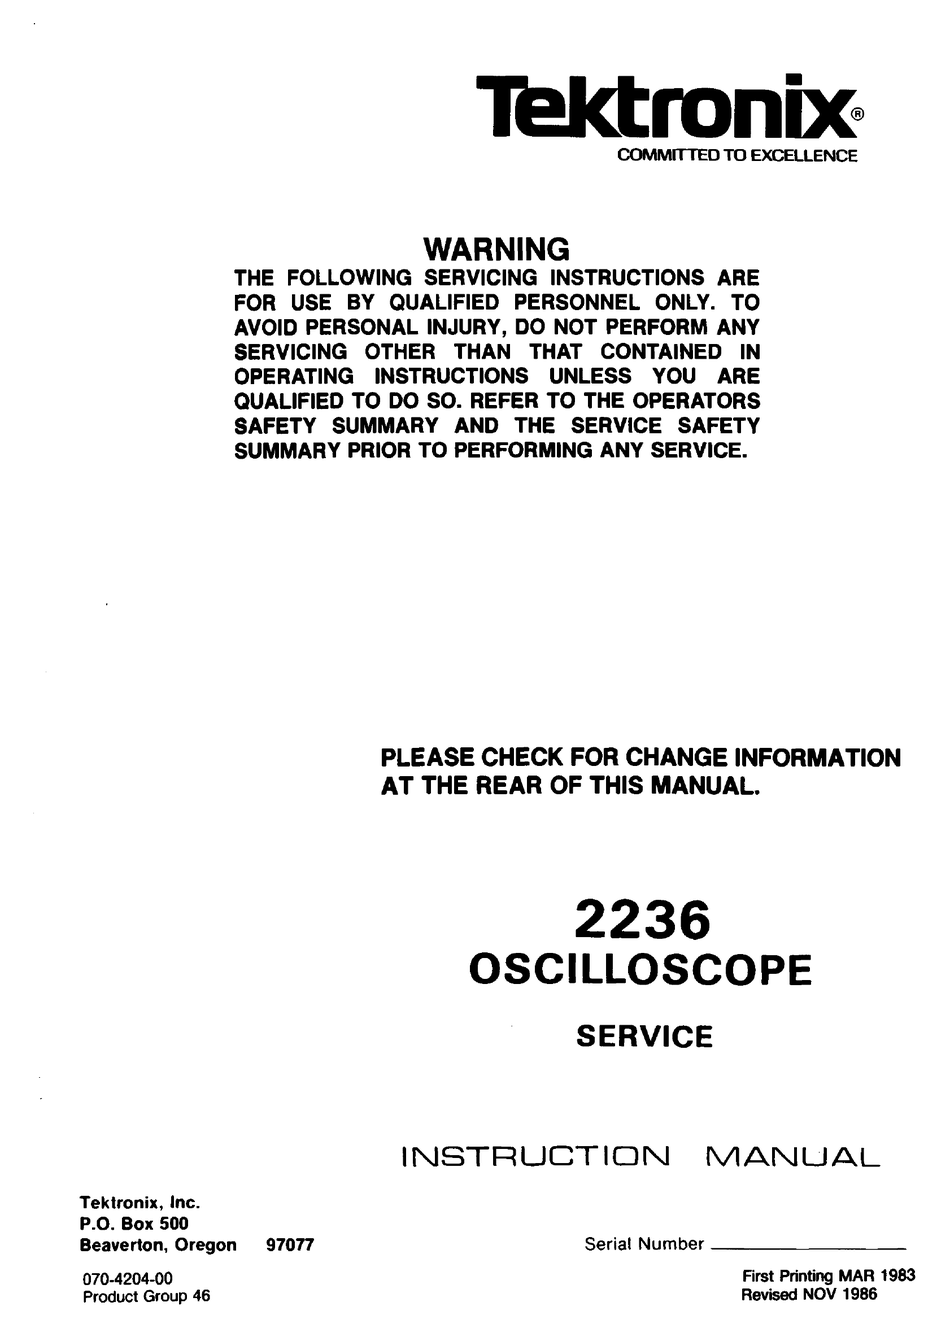 Tektronix TEK 211 Oscilloscope Service Manual CD 